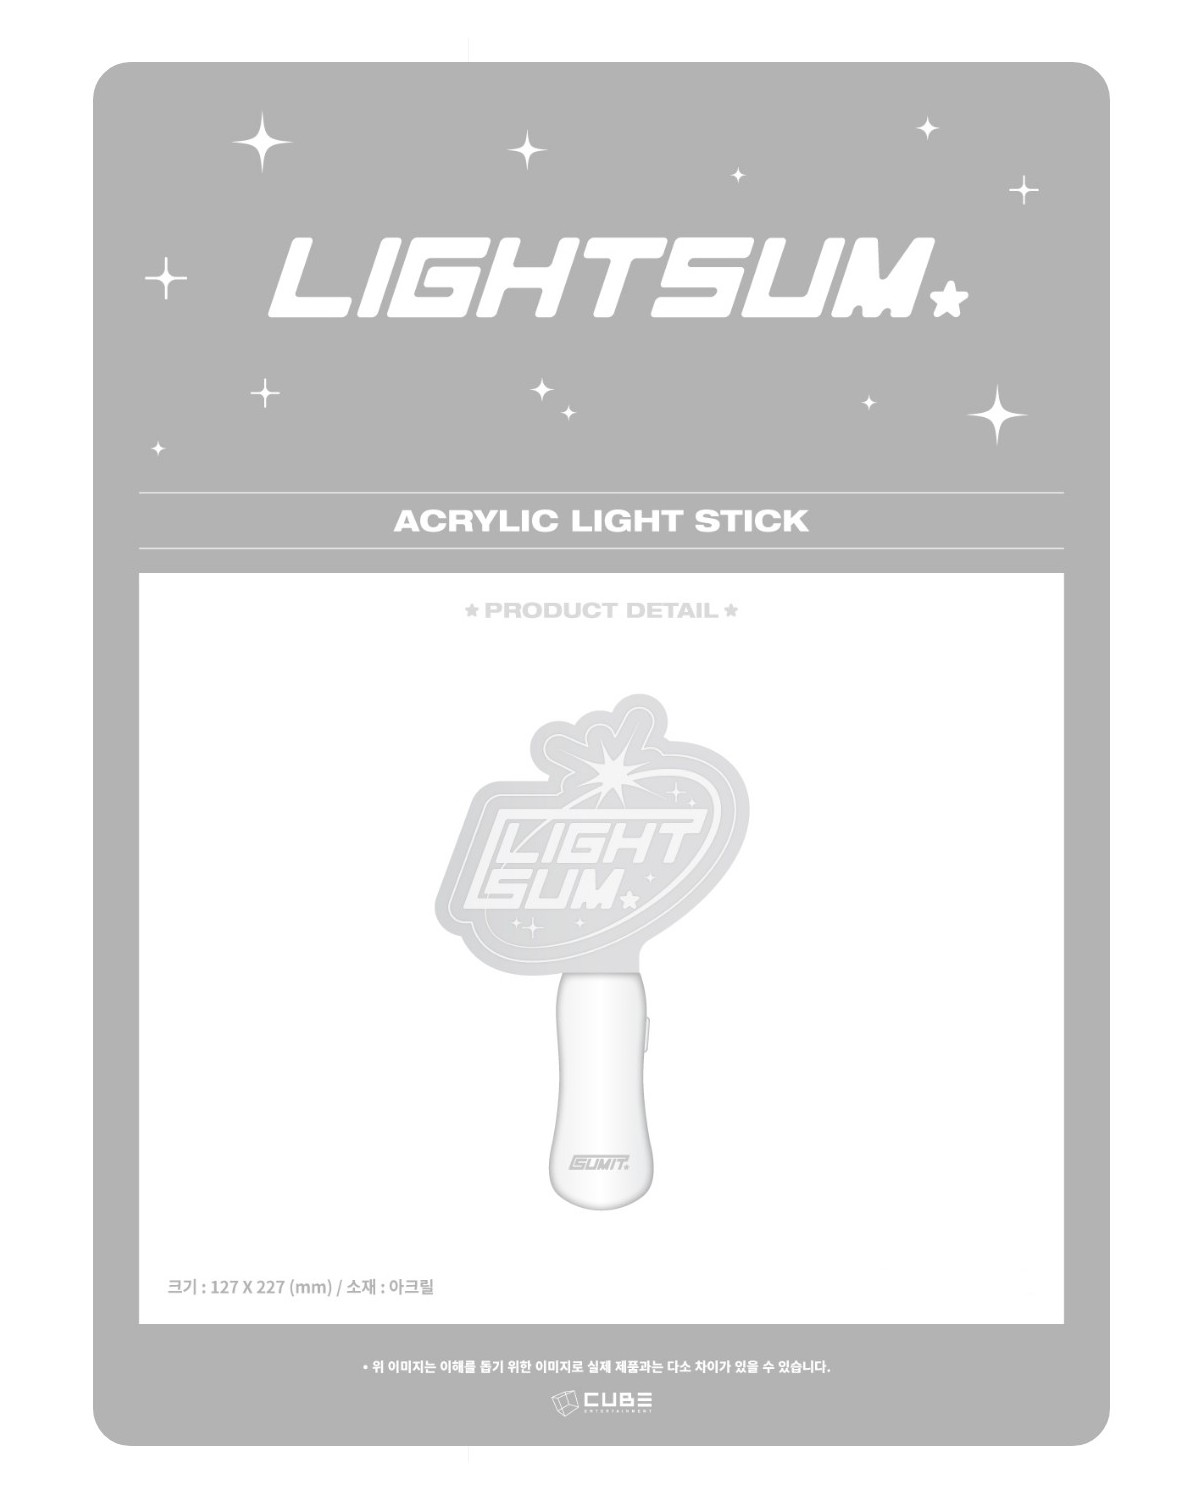 LIGHTSUM Acrylic Light Stick